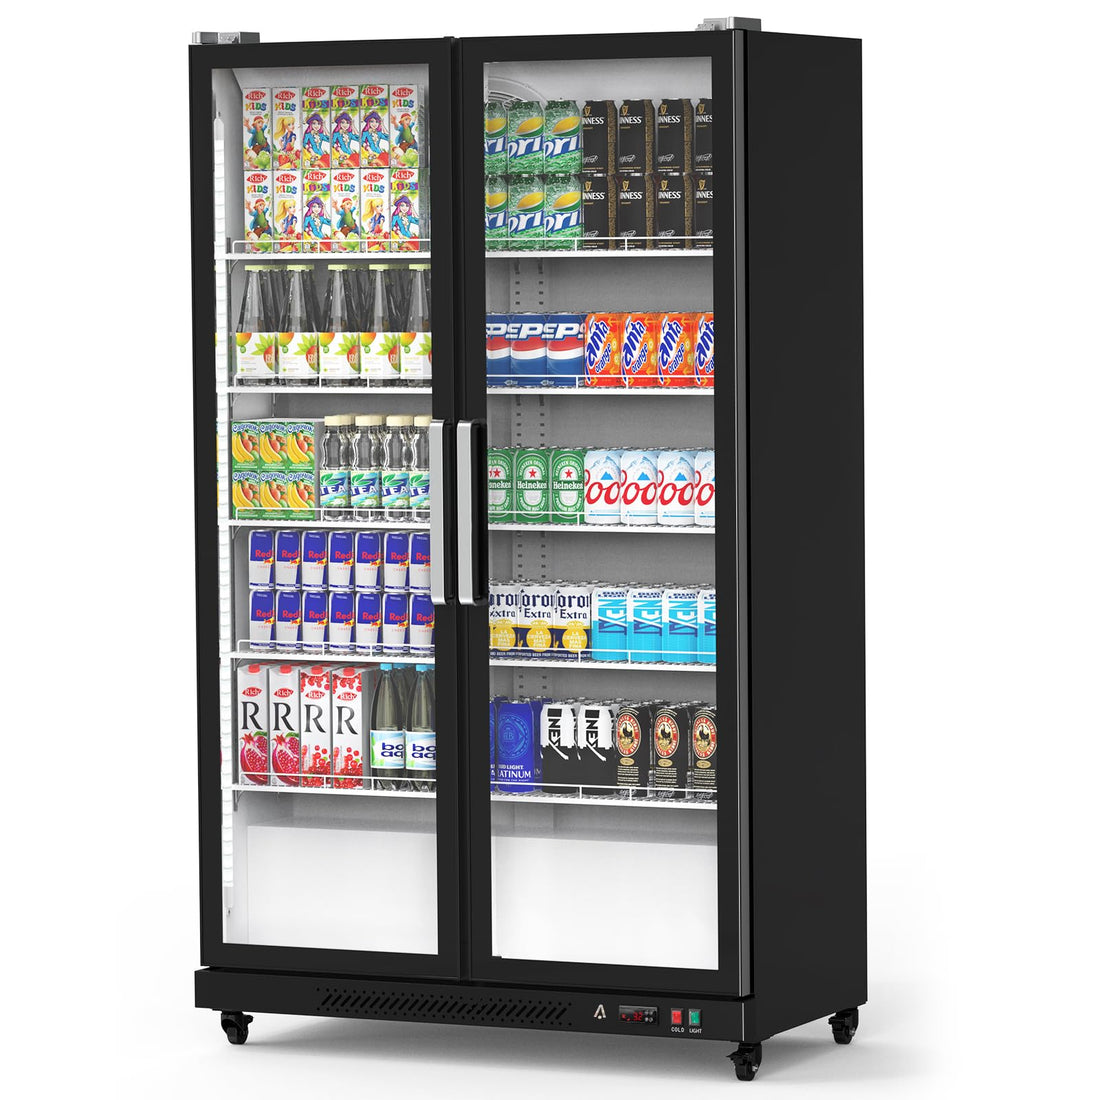 768L Commercial Display Refrigerator, 27.1 Cu. Ft. Display Fridge Merchandiser Upright Beverage Cooler, Double Glass Door Fridge with Adjustable Shelves & Drink Organizers for Wine Soda